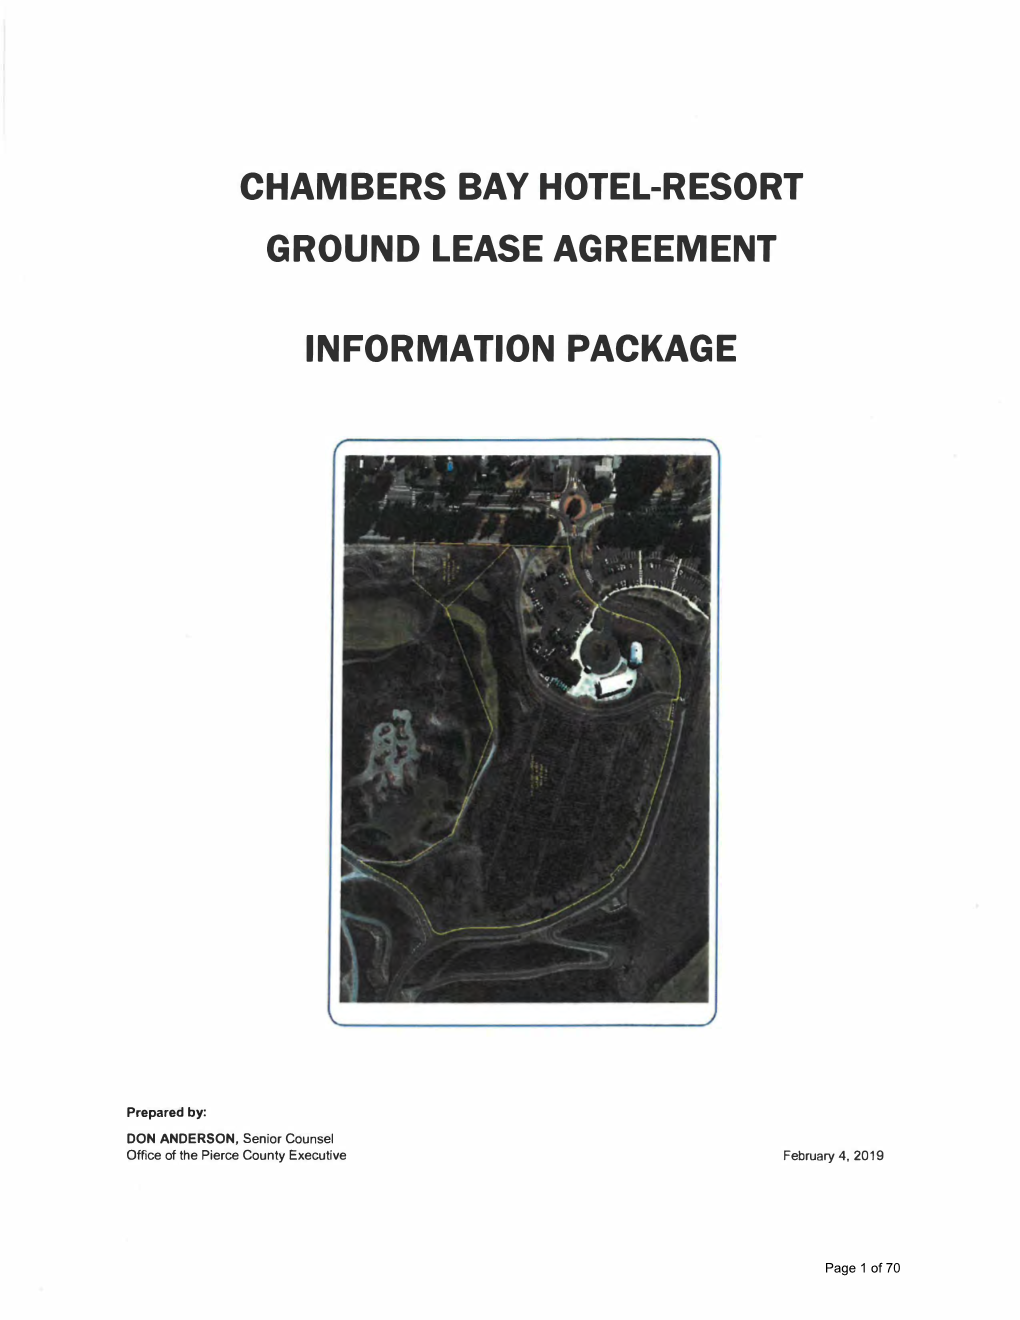 Chambers Bay Hotel-Resort Ground Lease Agreement